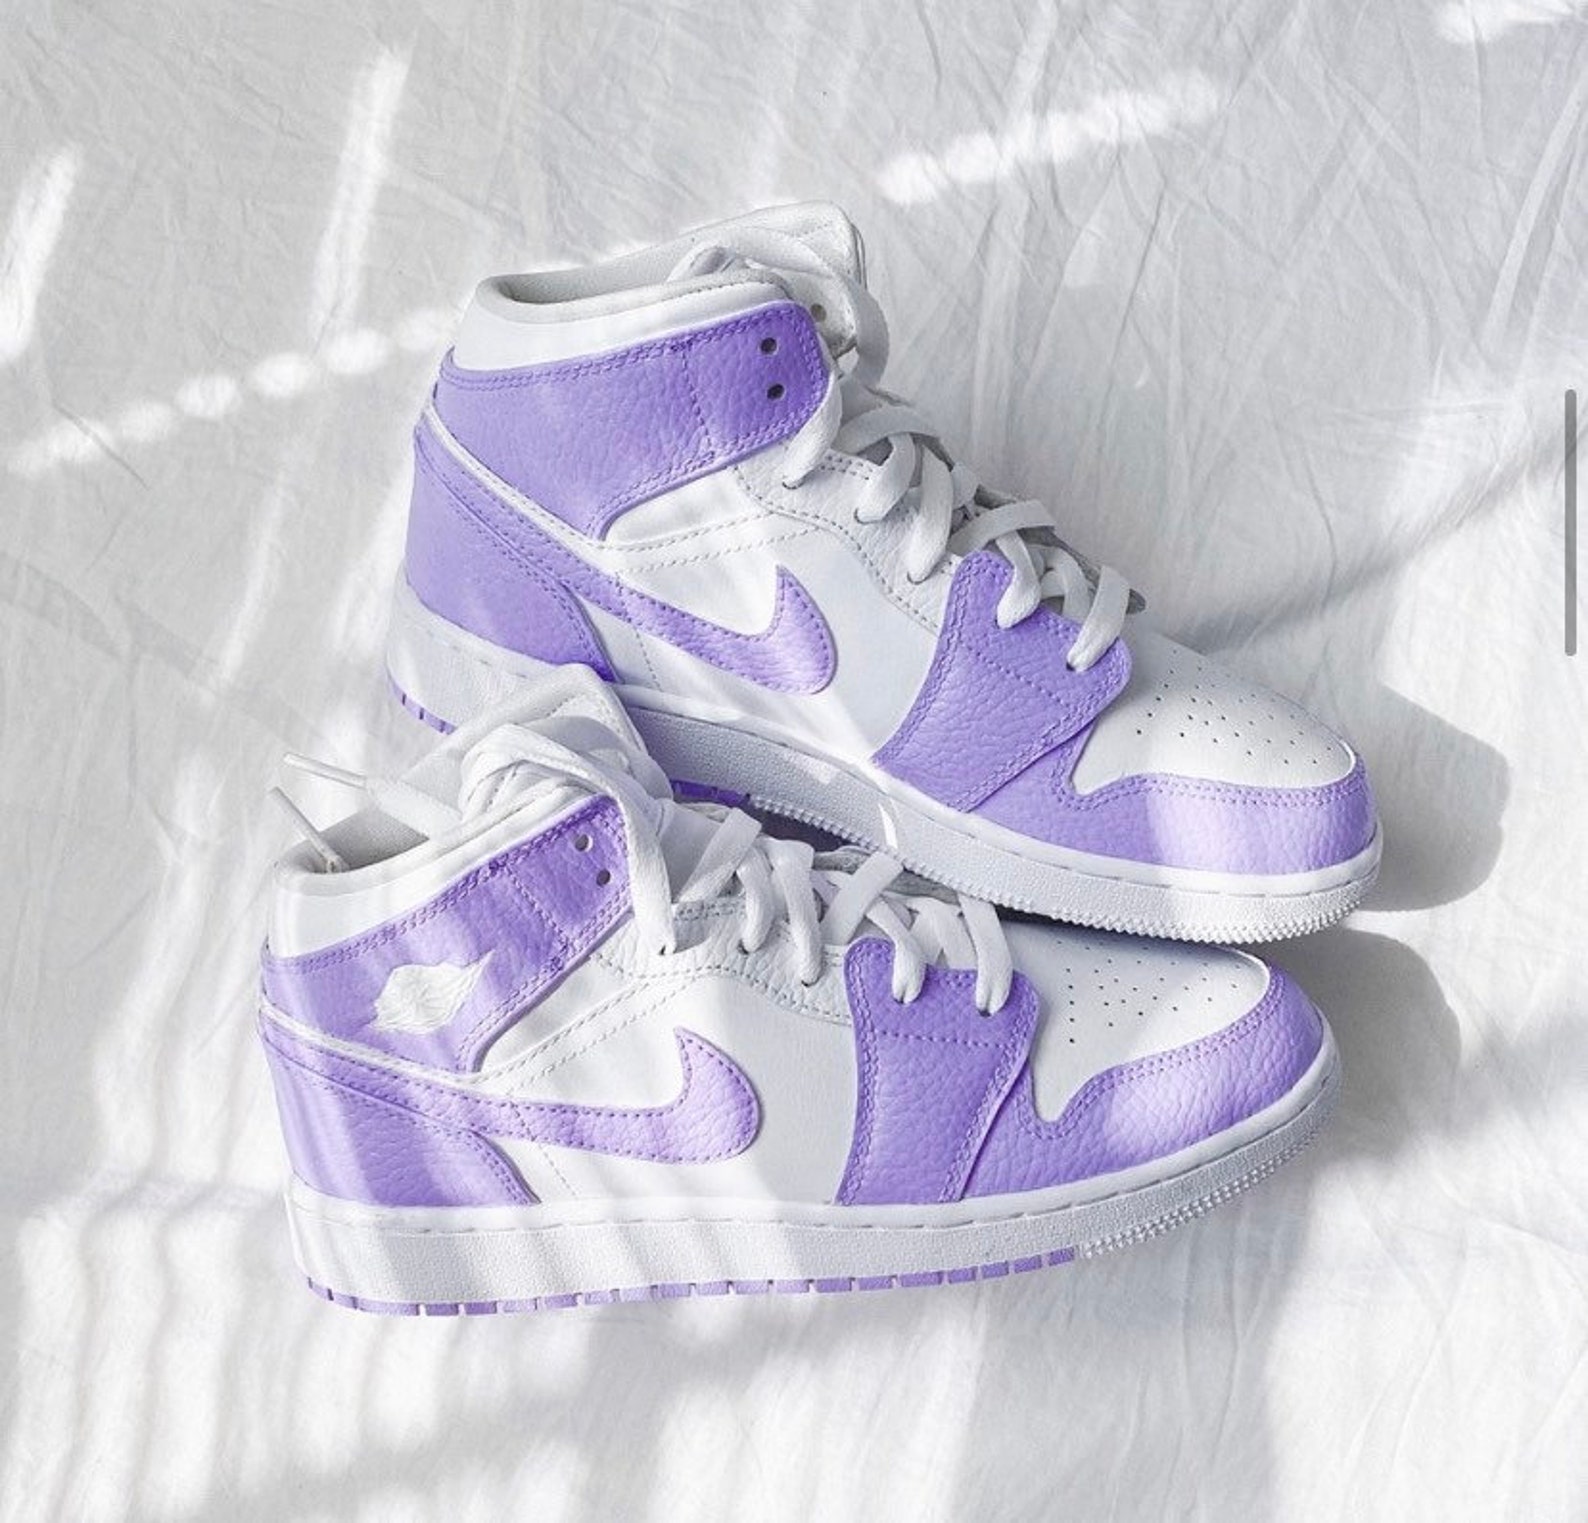 Custom purple/Lilac air jordan 1 mid sneakers | Etsy